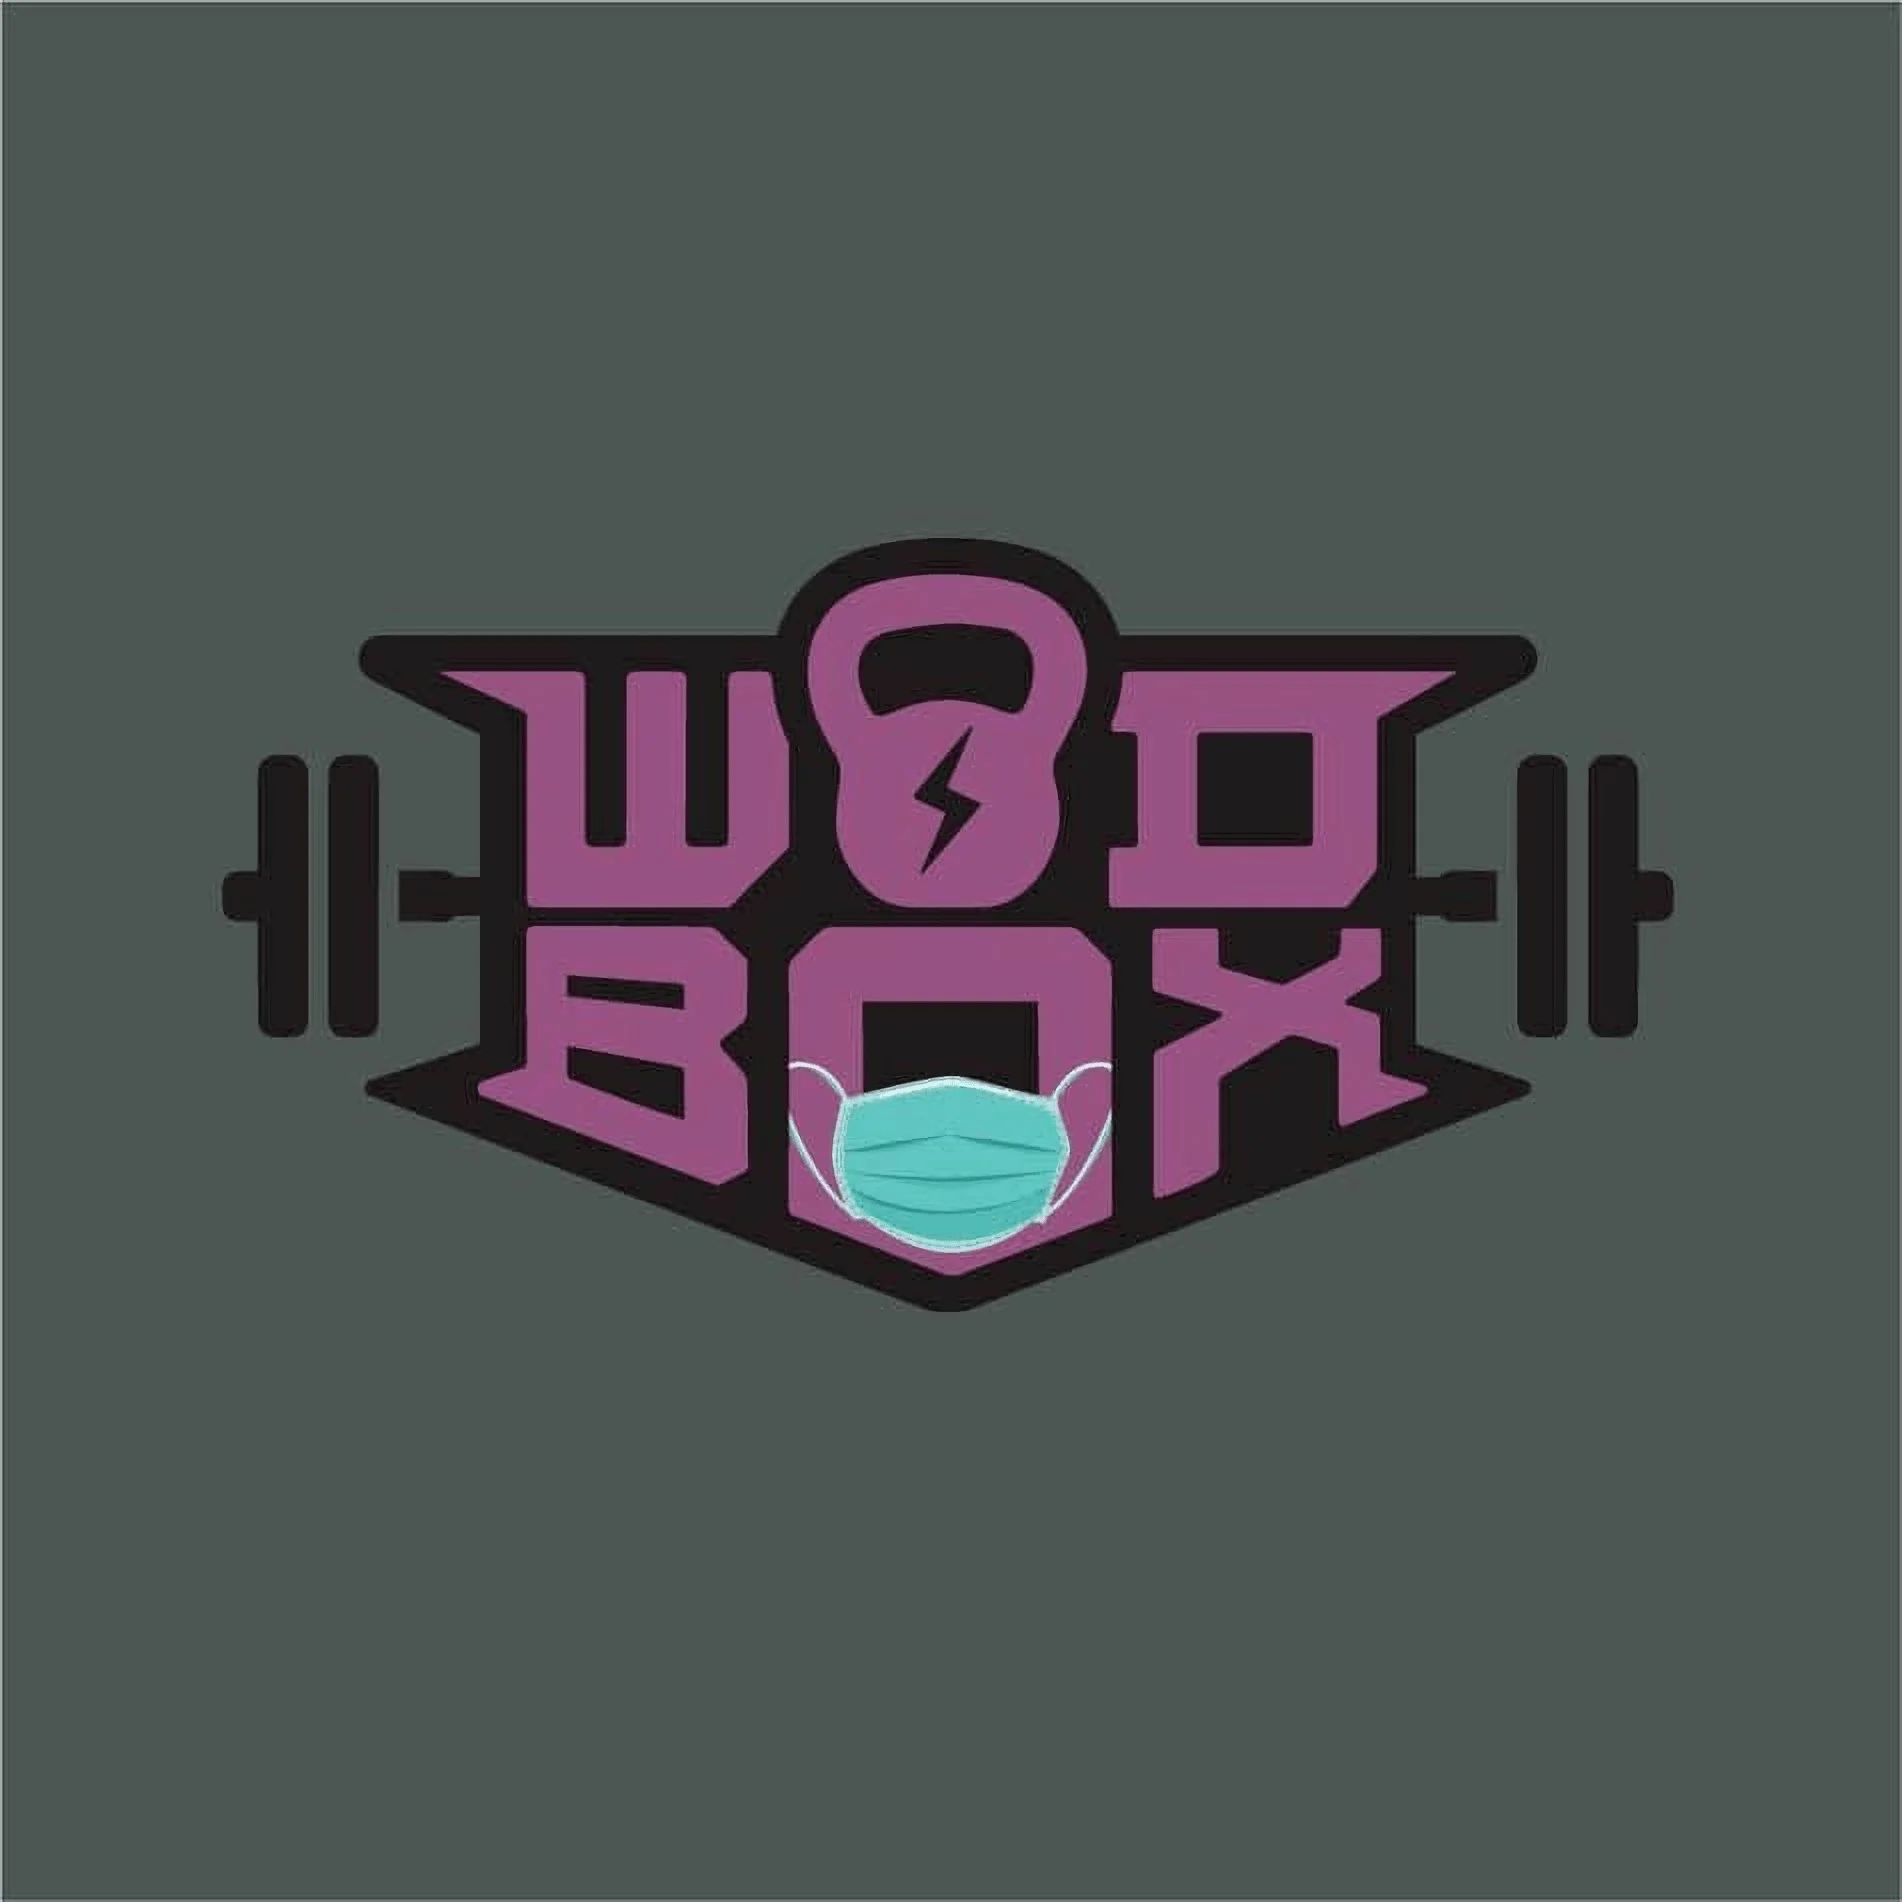 Wodbox (Sede Fuerza)-1066